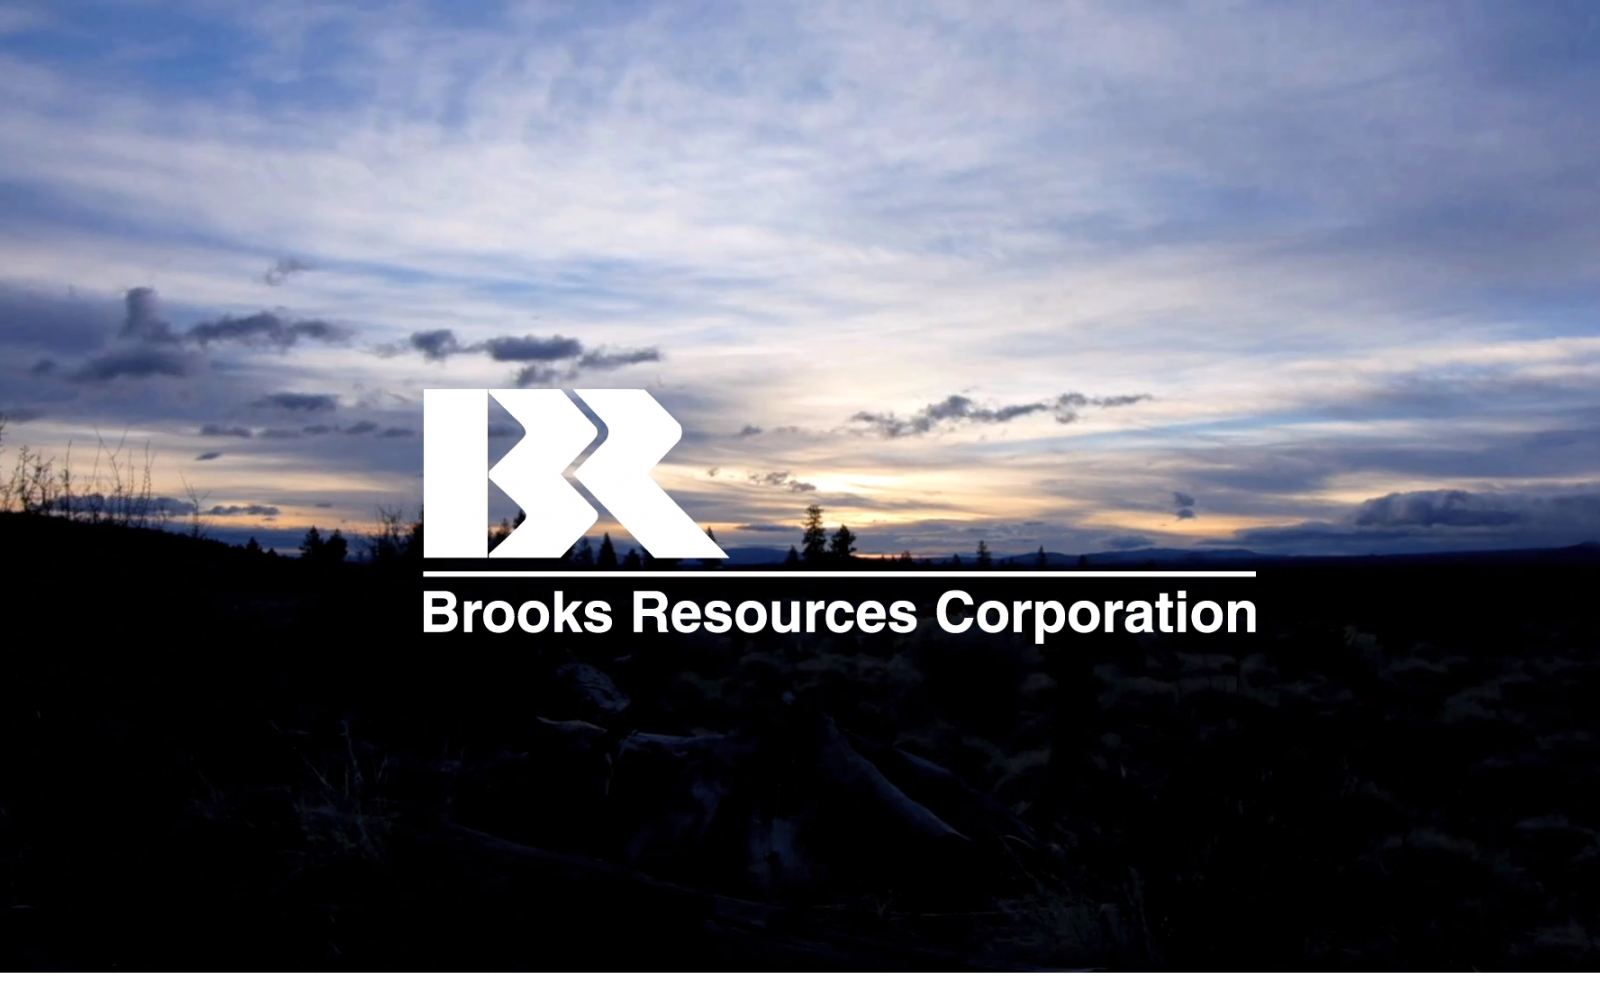 BrooksResources.com